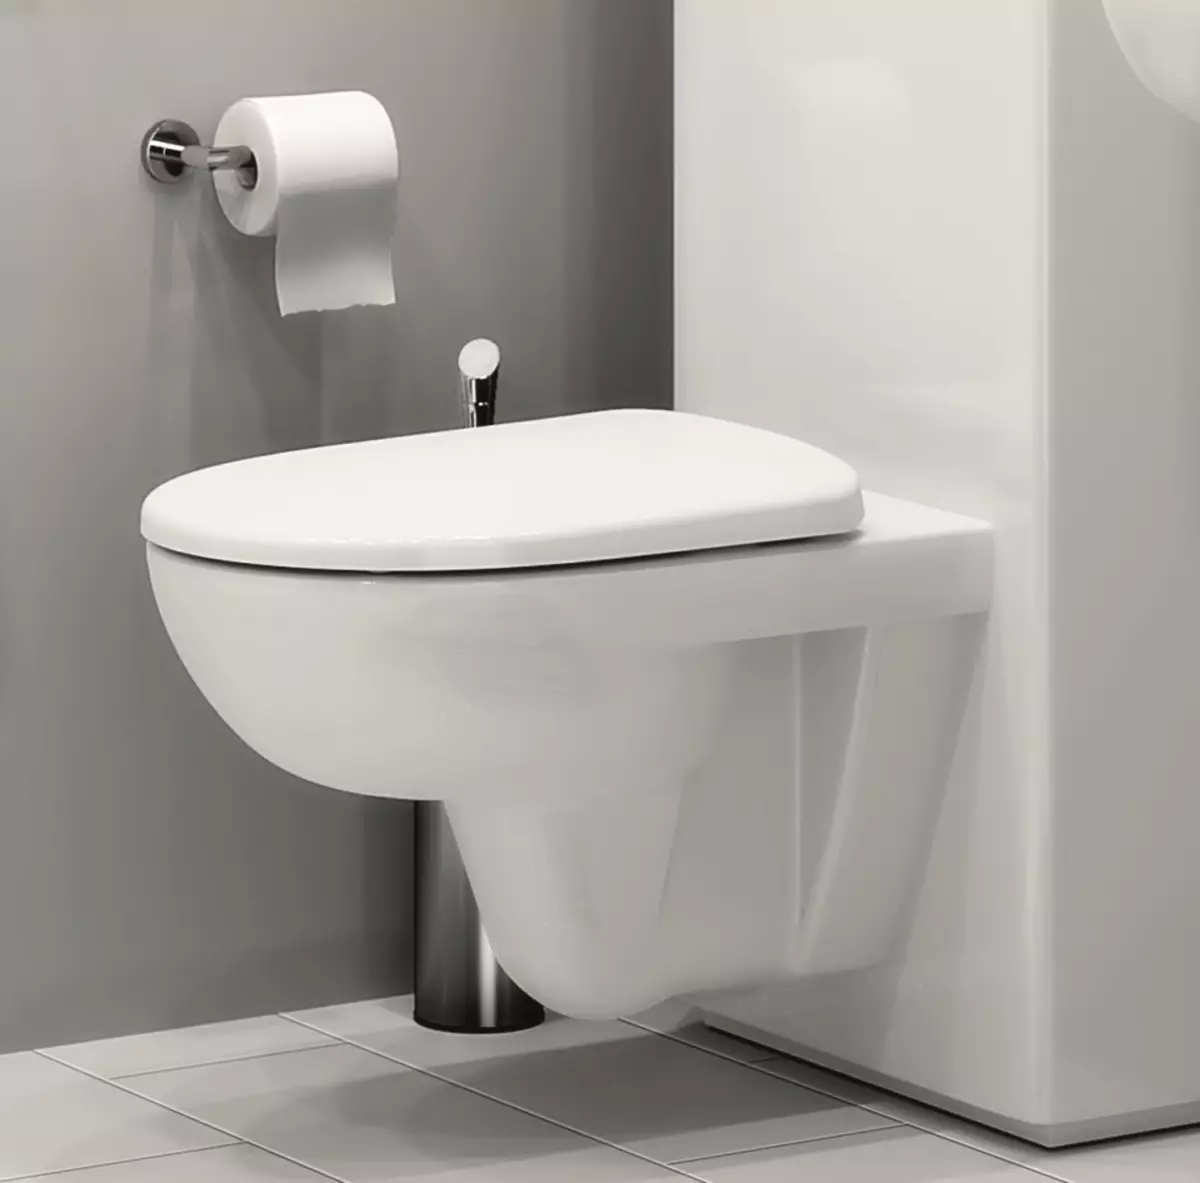 Kolo τουαλέτες: Περιγραφή των αιωρούμενων και τουαλέτες όροφο, στυλ και σόλο, Nova Pro Rimfree και Runa, Idol και άλλα μοντέλα 10529_3